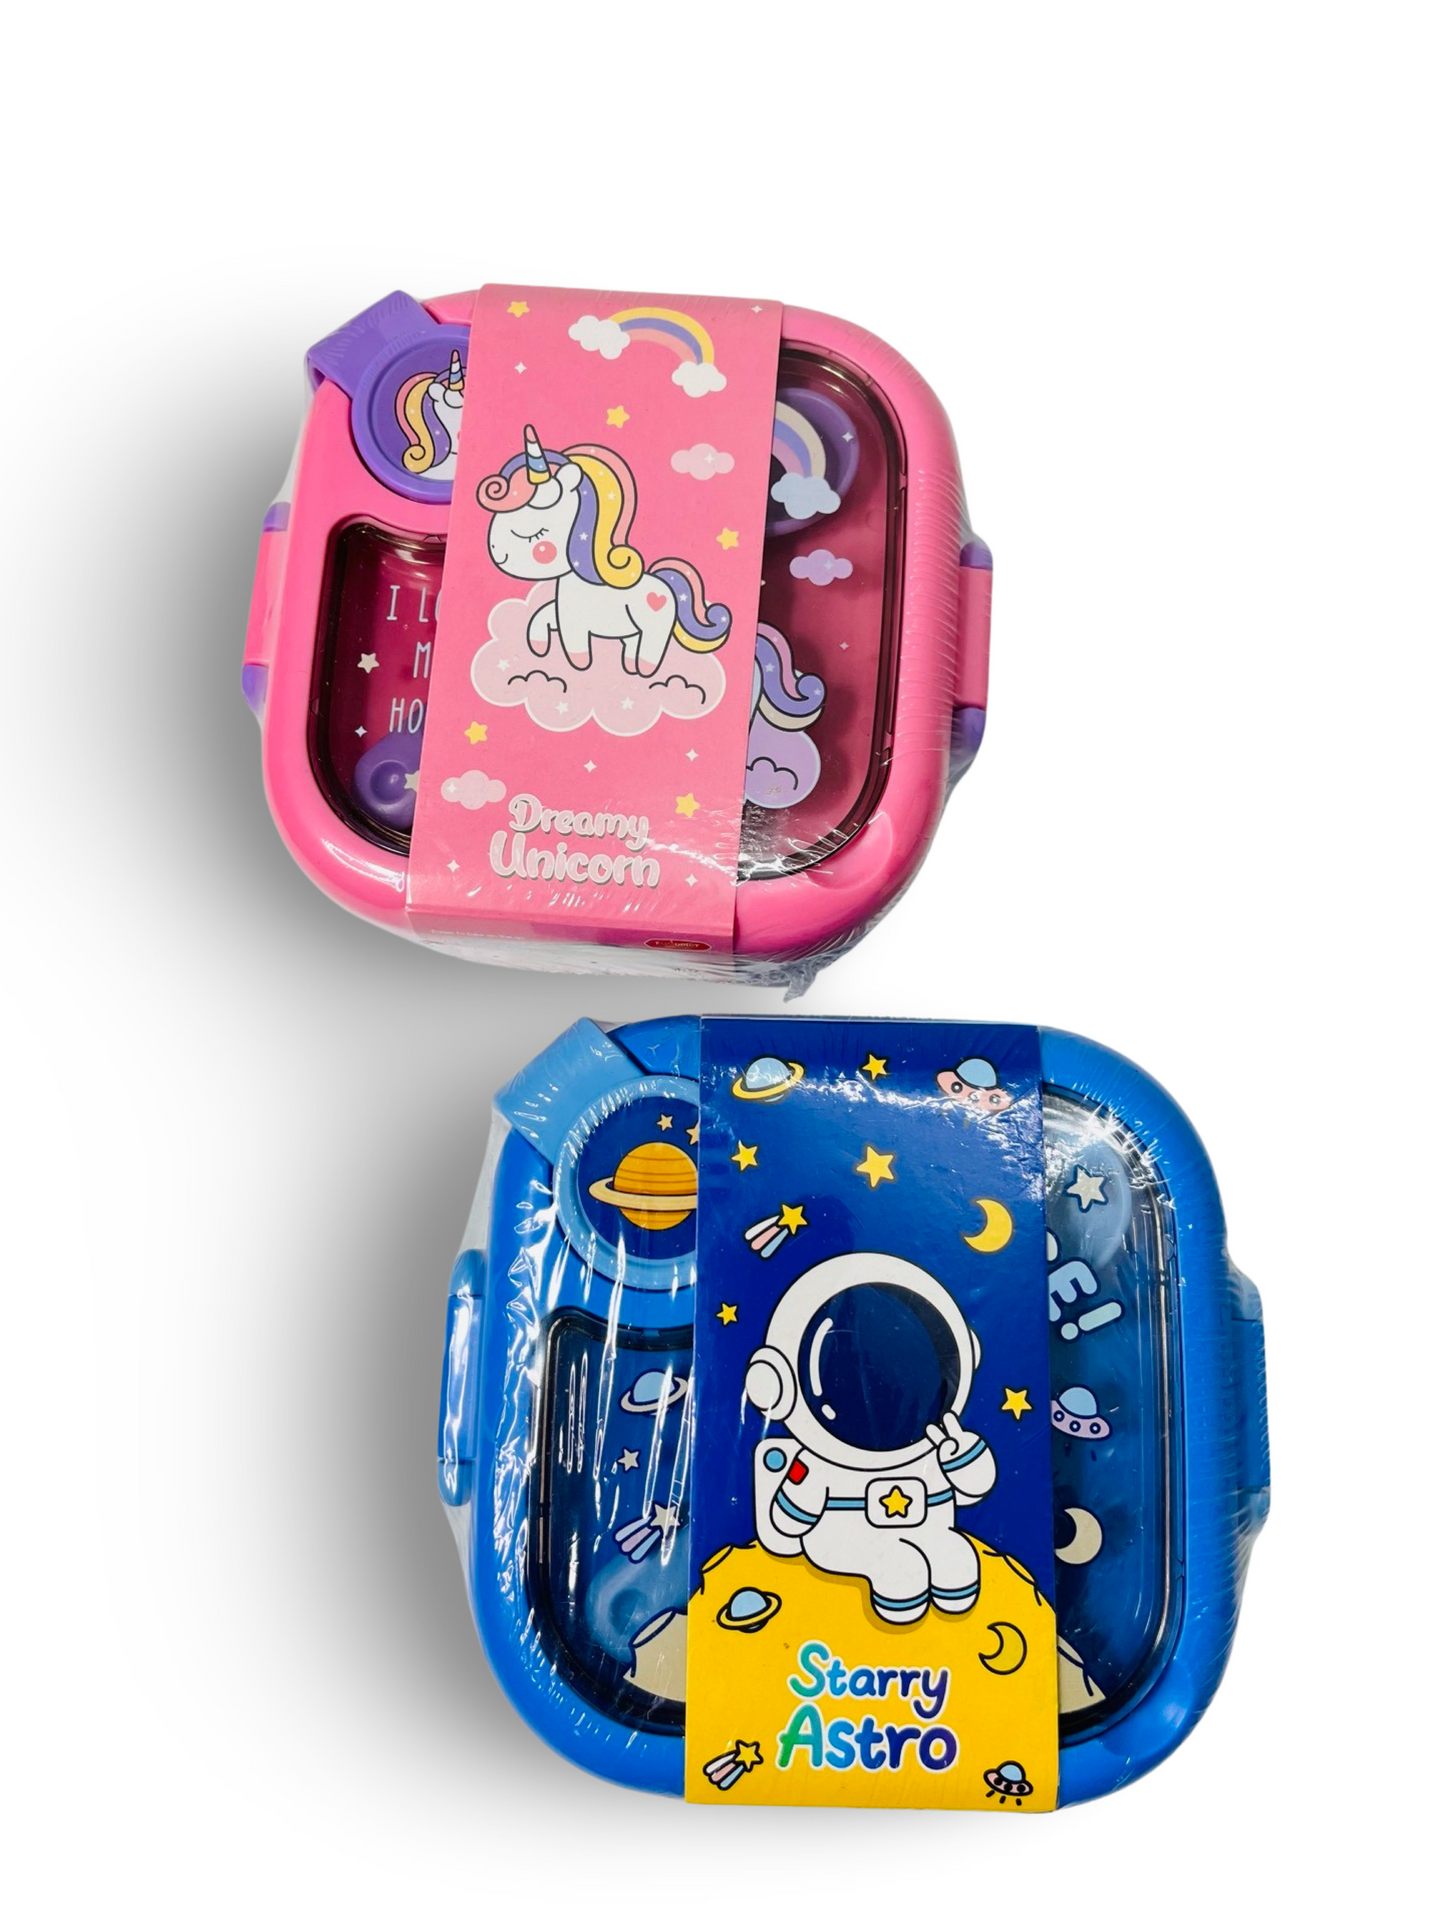 Cute Space & Unicorn Theme Lunch Box for Kids 750ml